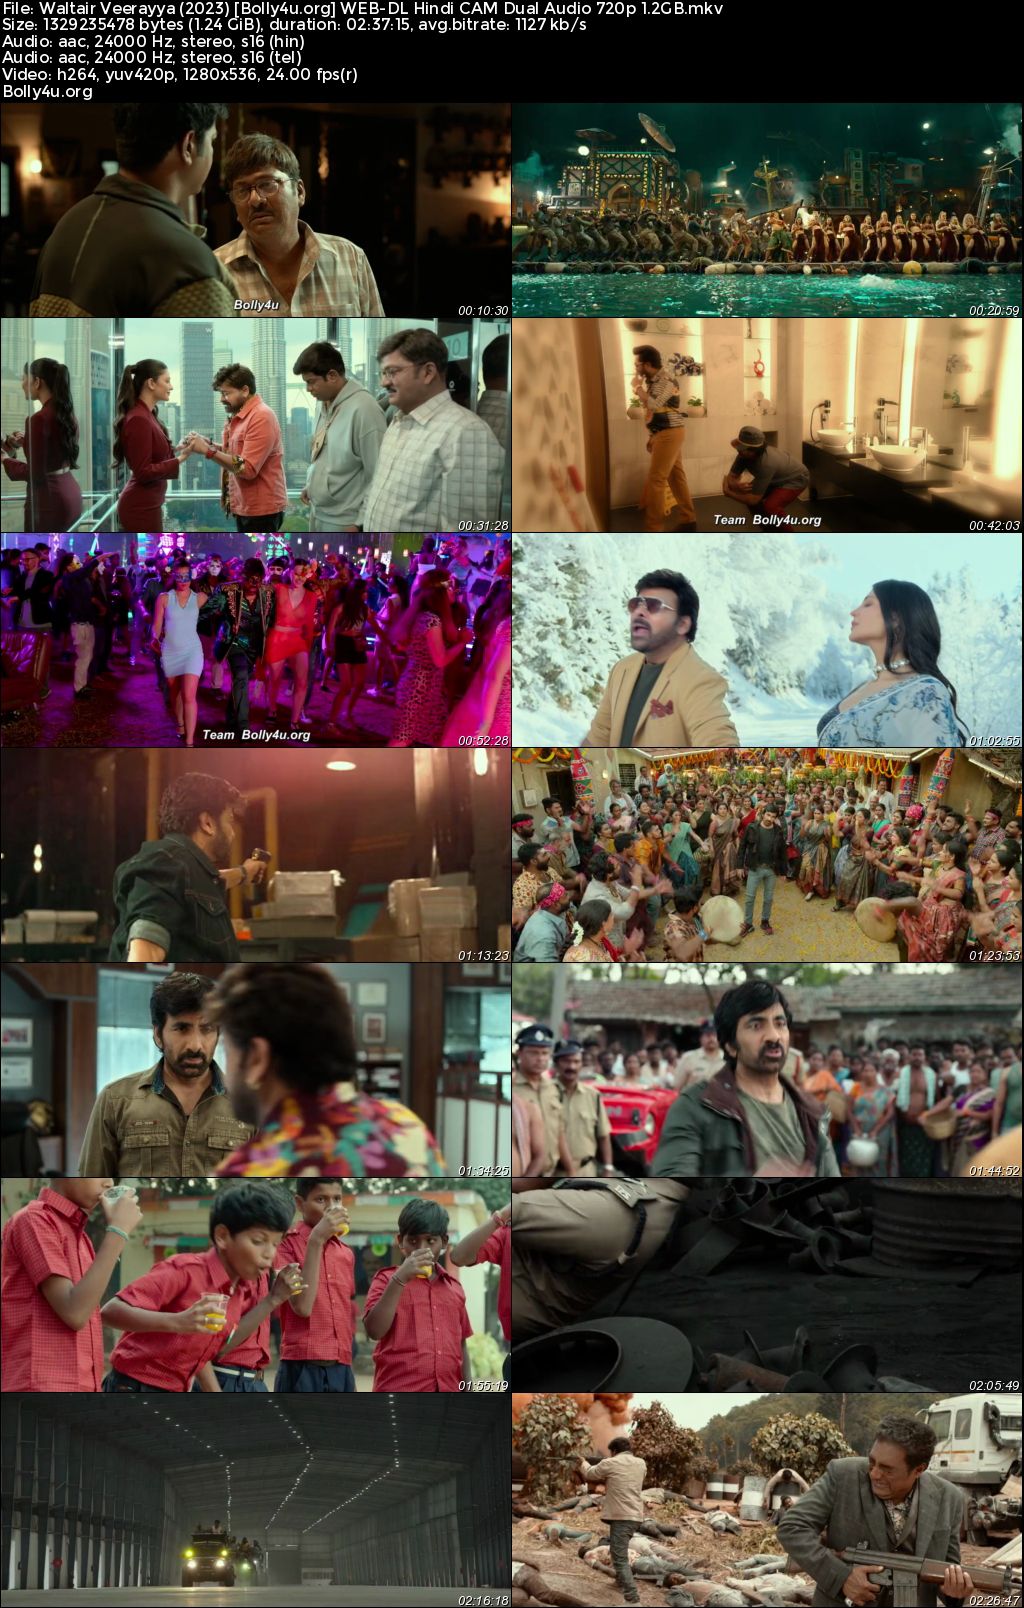 Waltair Veerayya 2023 WEB-DL Hindi CAM Cleaned Dual Audio Full Movie Download 1080p 720p 480p